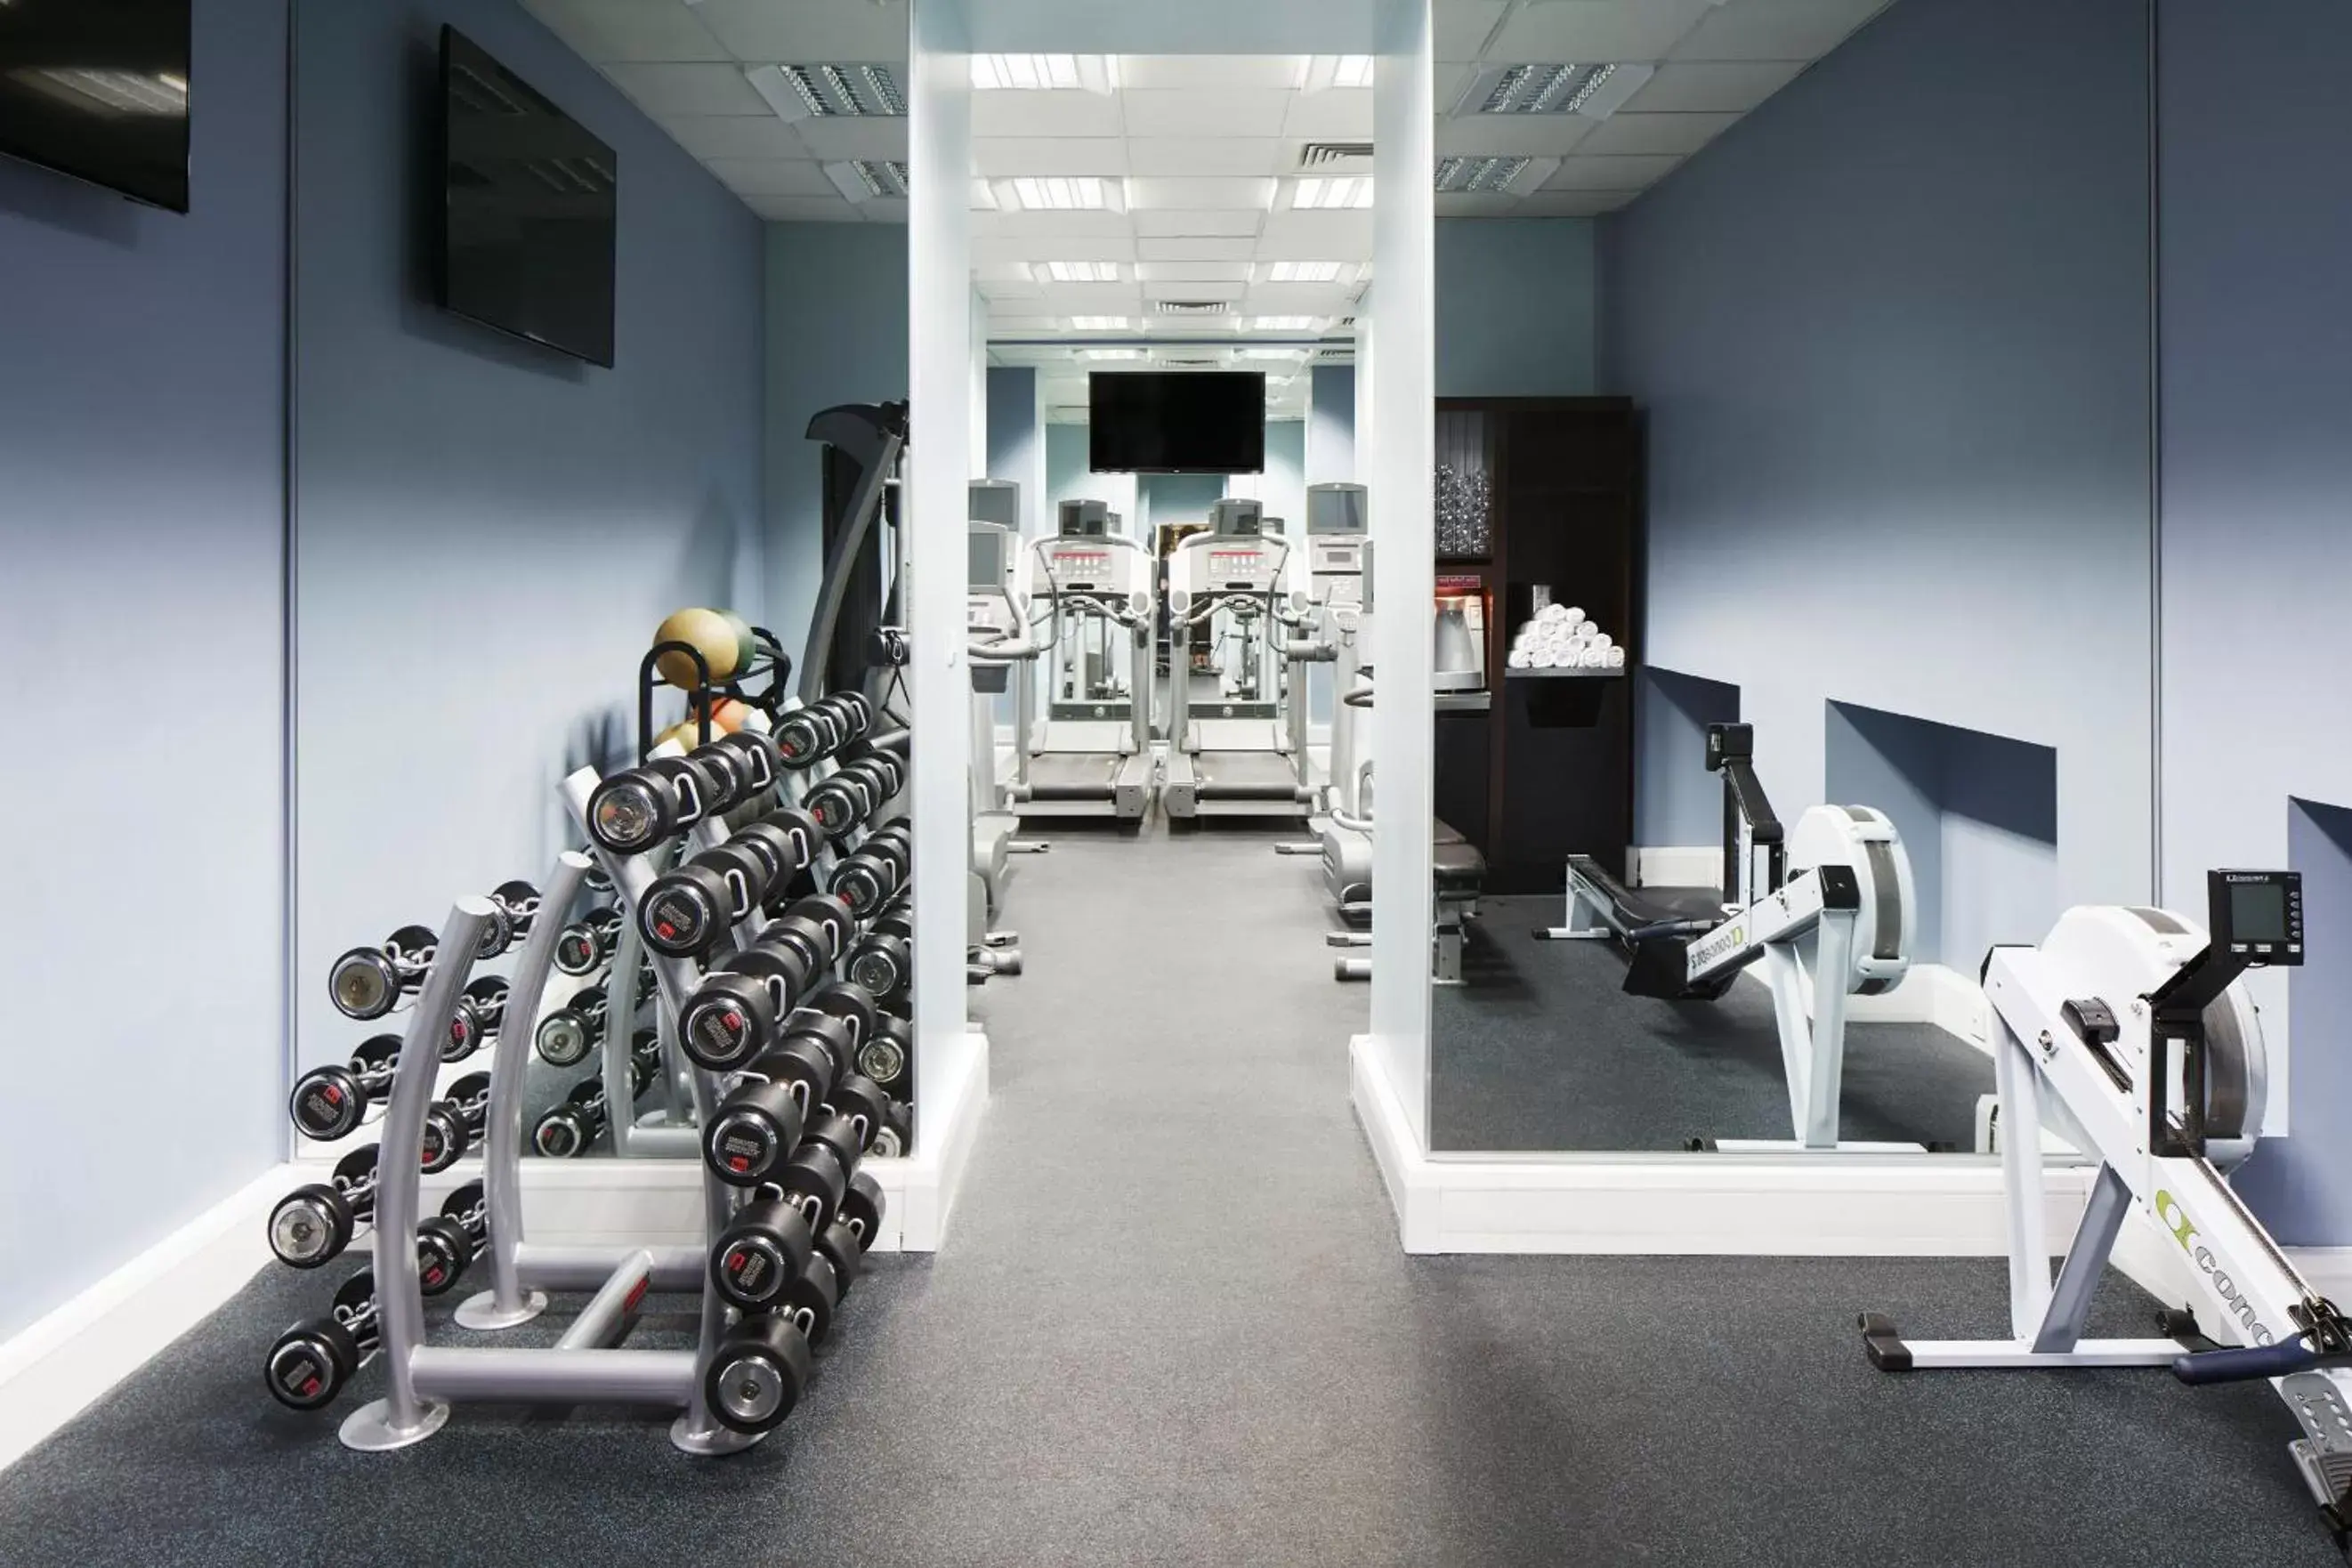 Fitness centre/facilities, Fitness Center/Facilities in The Grand at Trafalgar Square